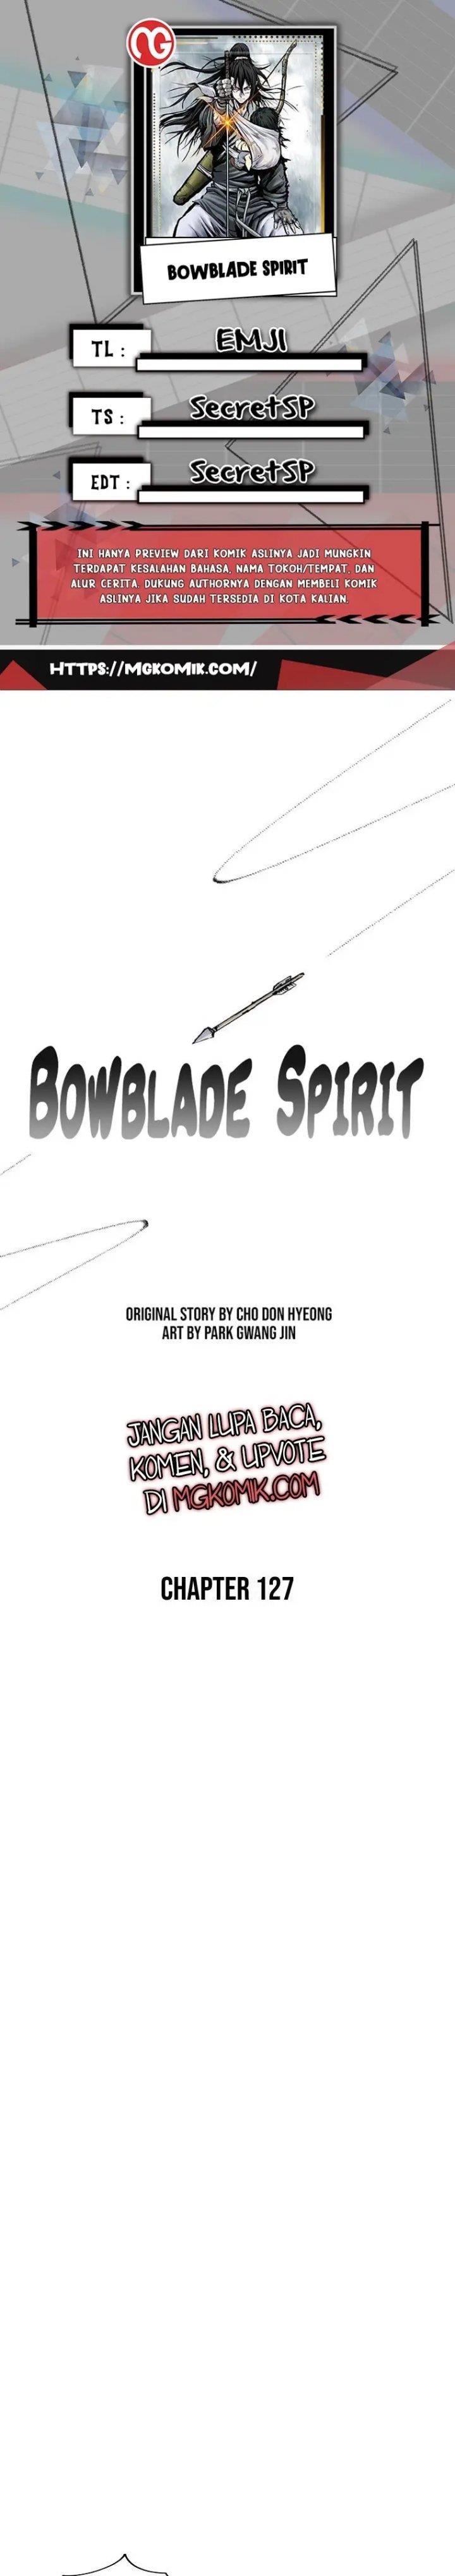 Bowblade Spirit Chapter 127